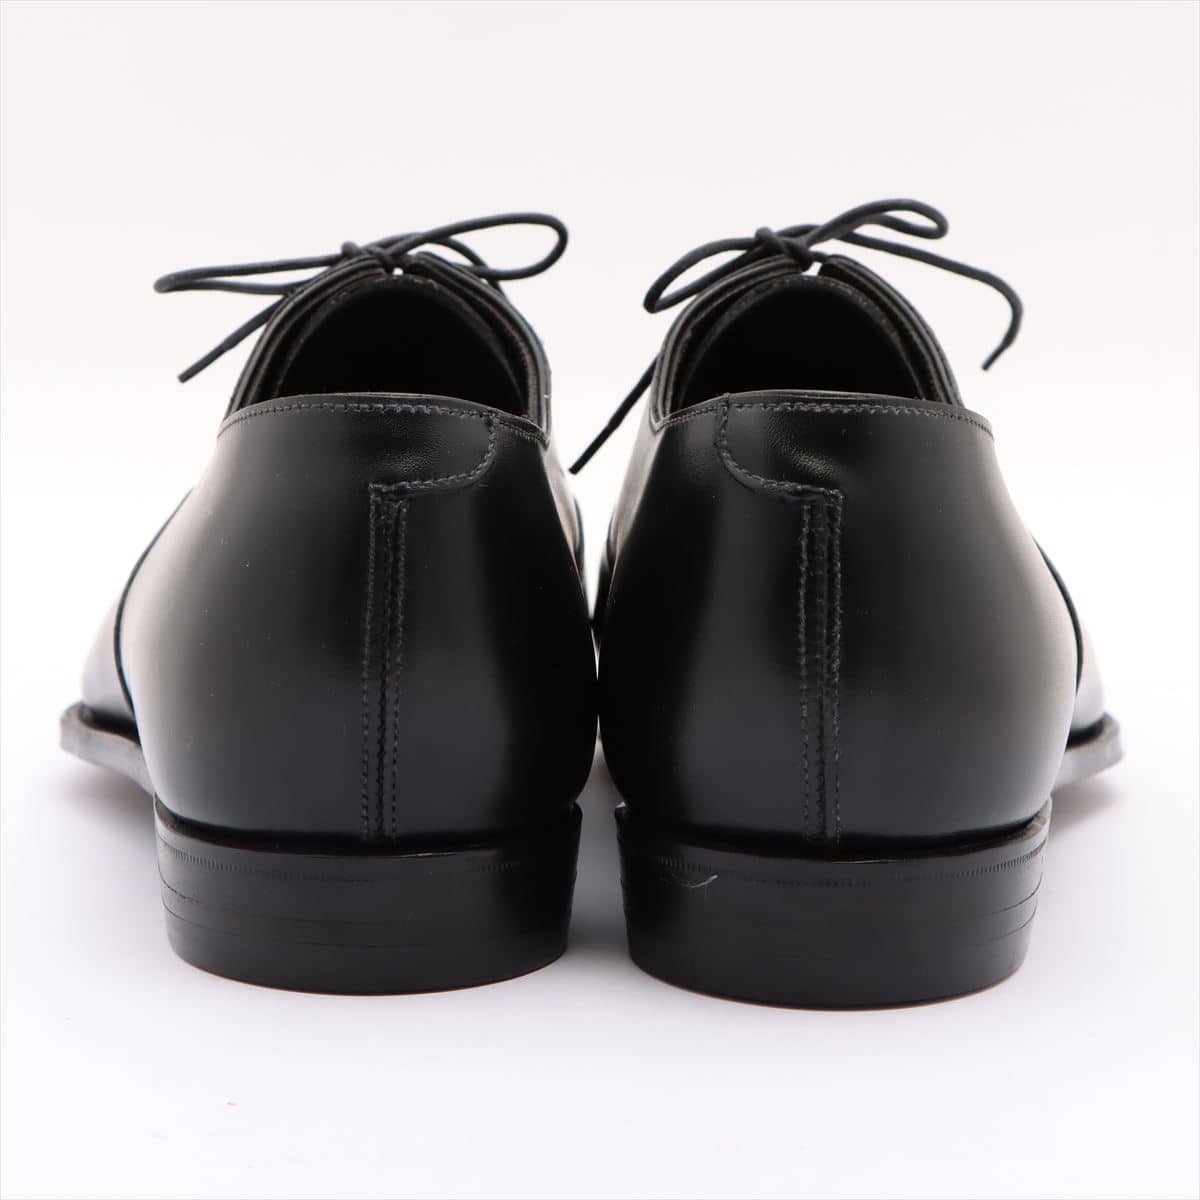 Crockett & Jones Leather Leather shoes 8 Men's Black With genuine shoe tree